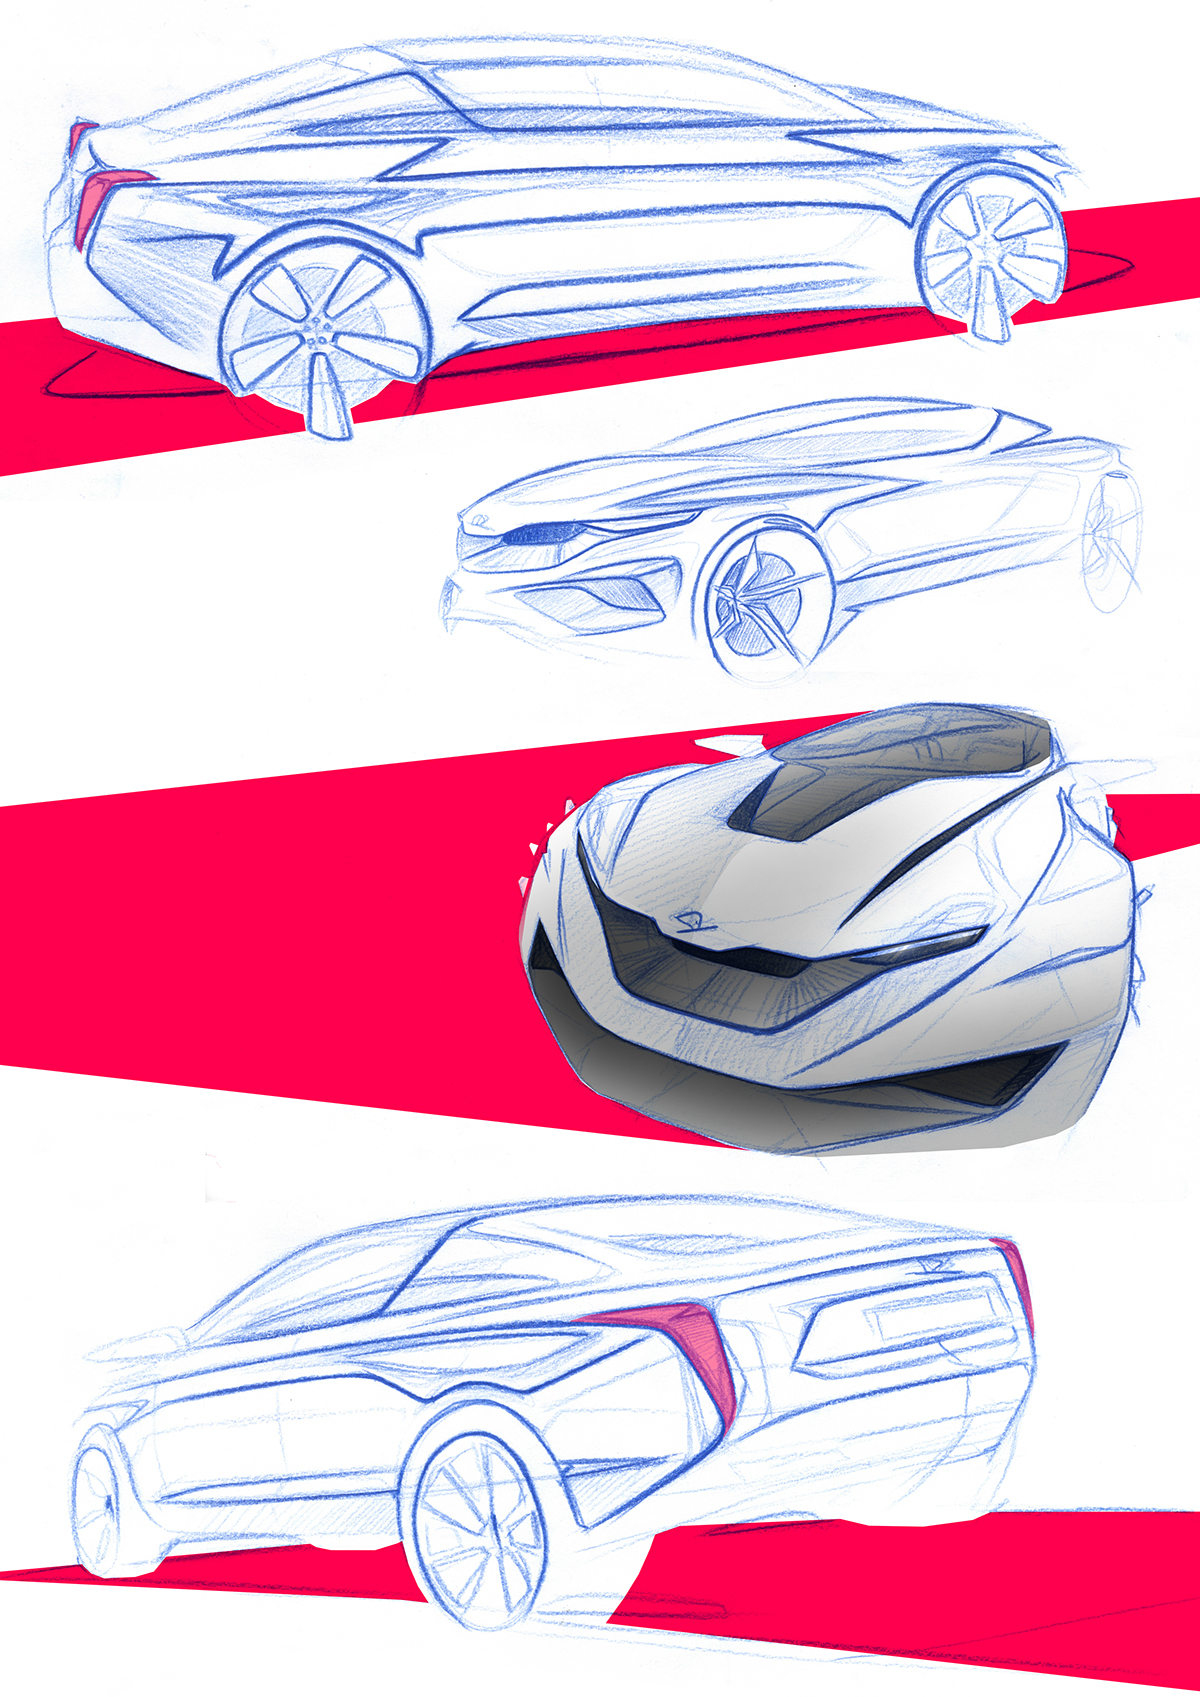 Skoda Skoda vision concept coupe futuristic future car automotive   Student work Pforzheim thesis Project secret design